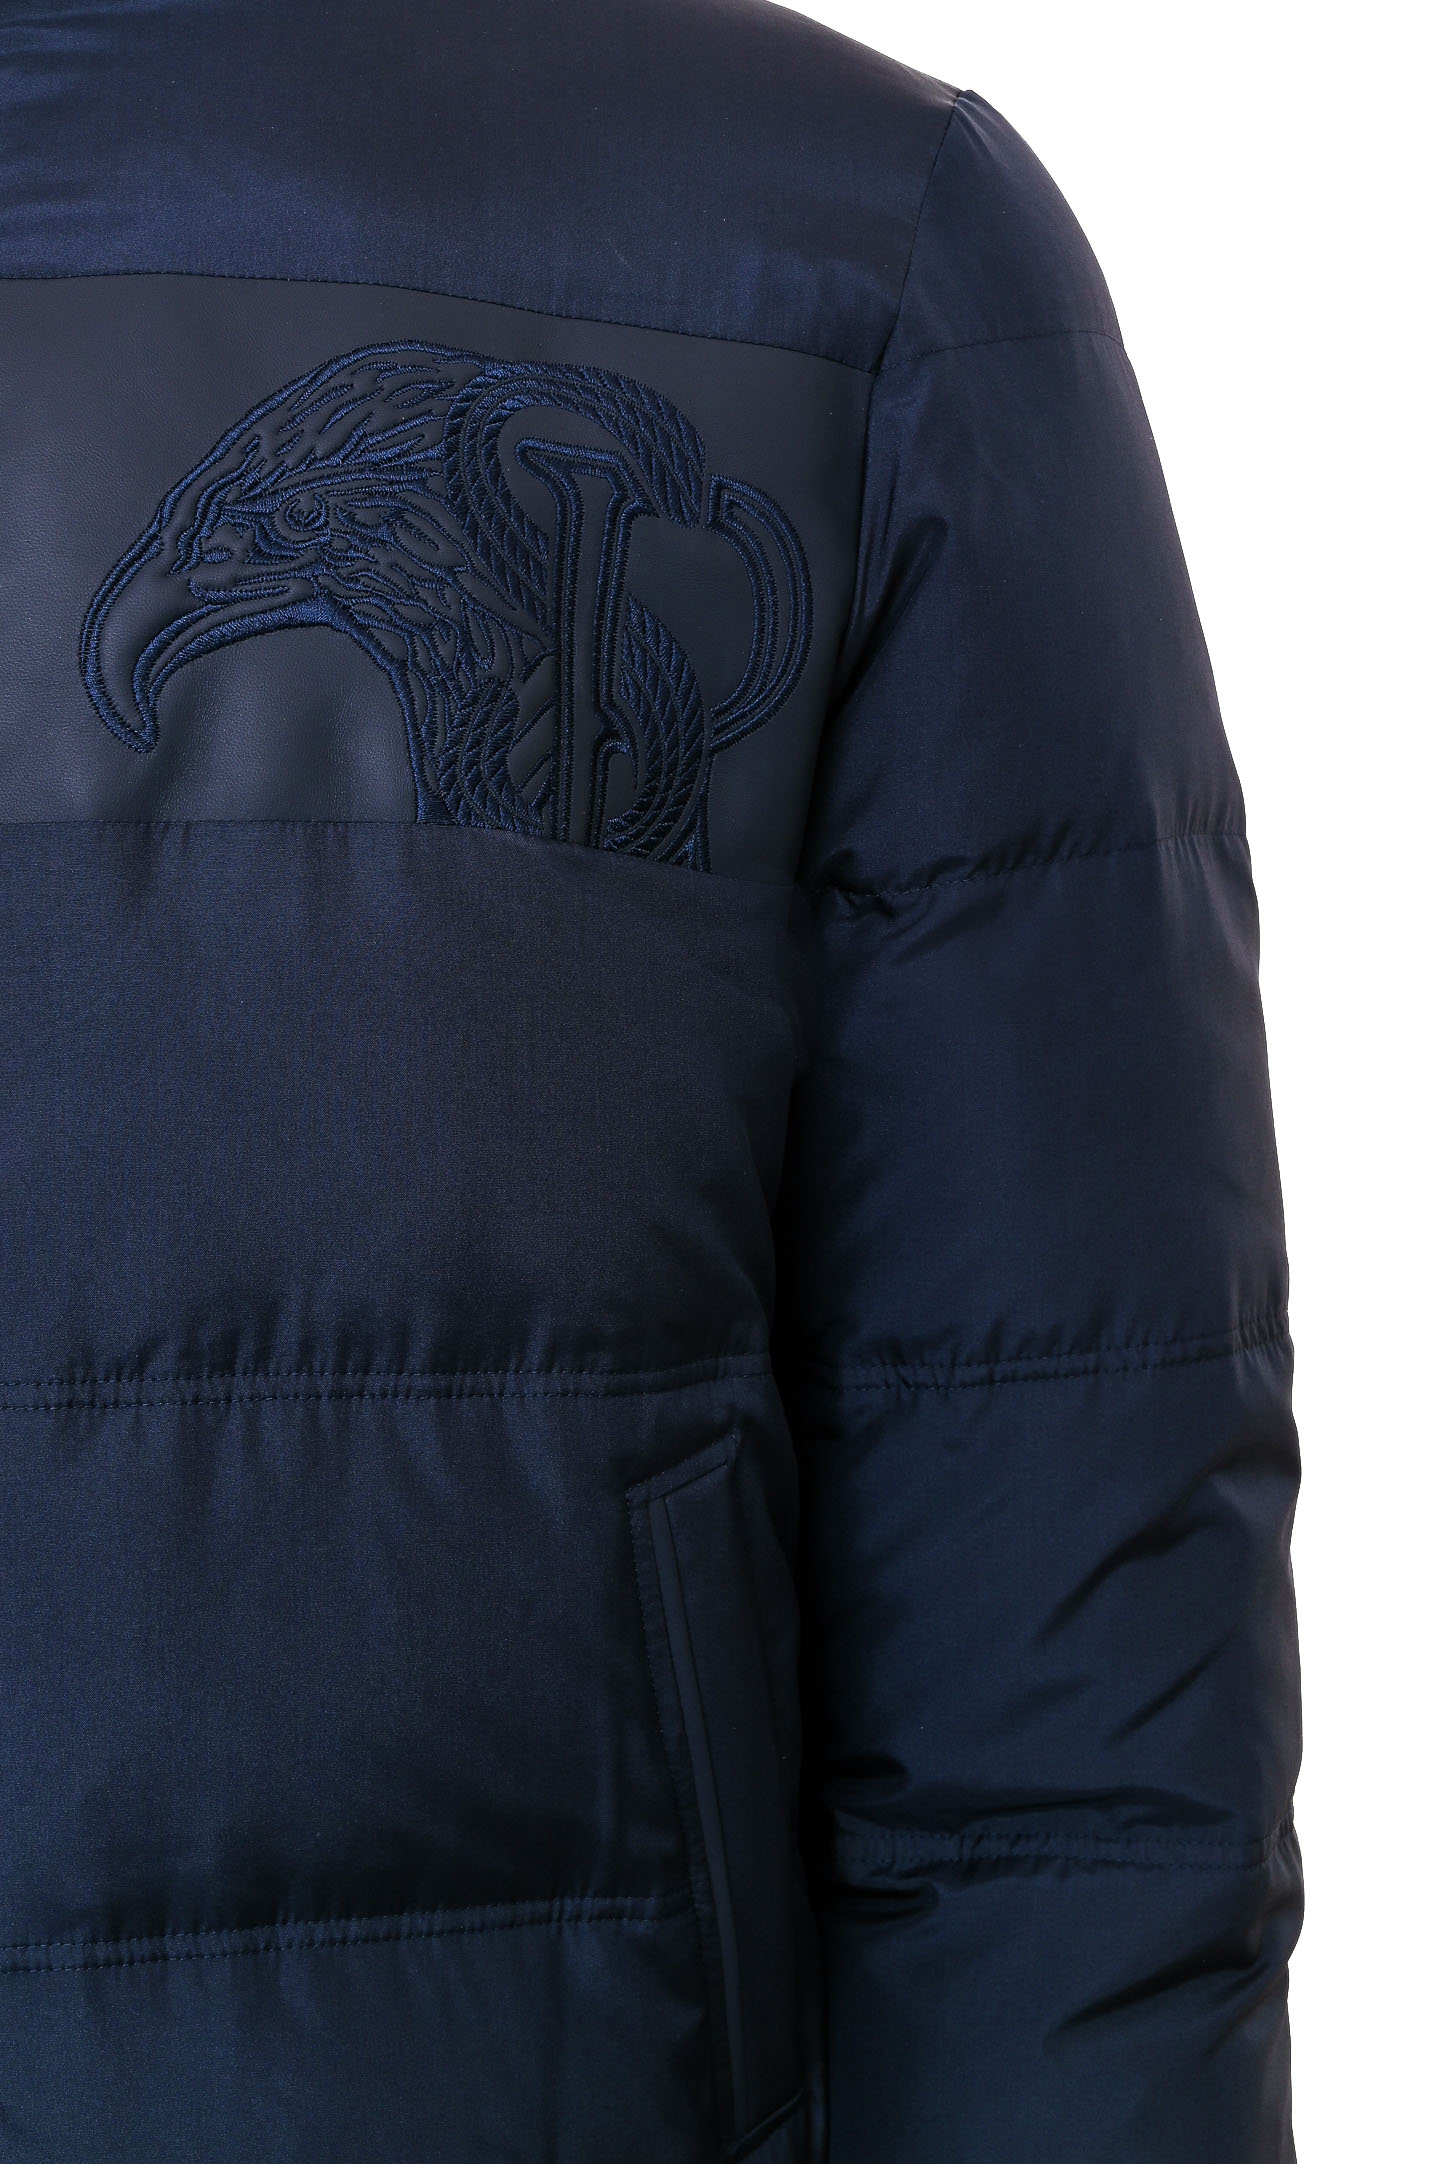 Куртка STEFANO RICCI M7J1400150 SETEC1, цвет: Синий, Мужской